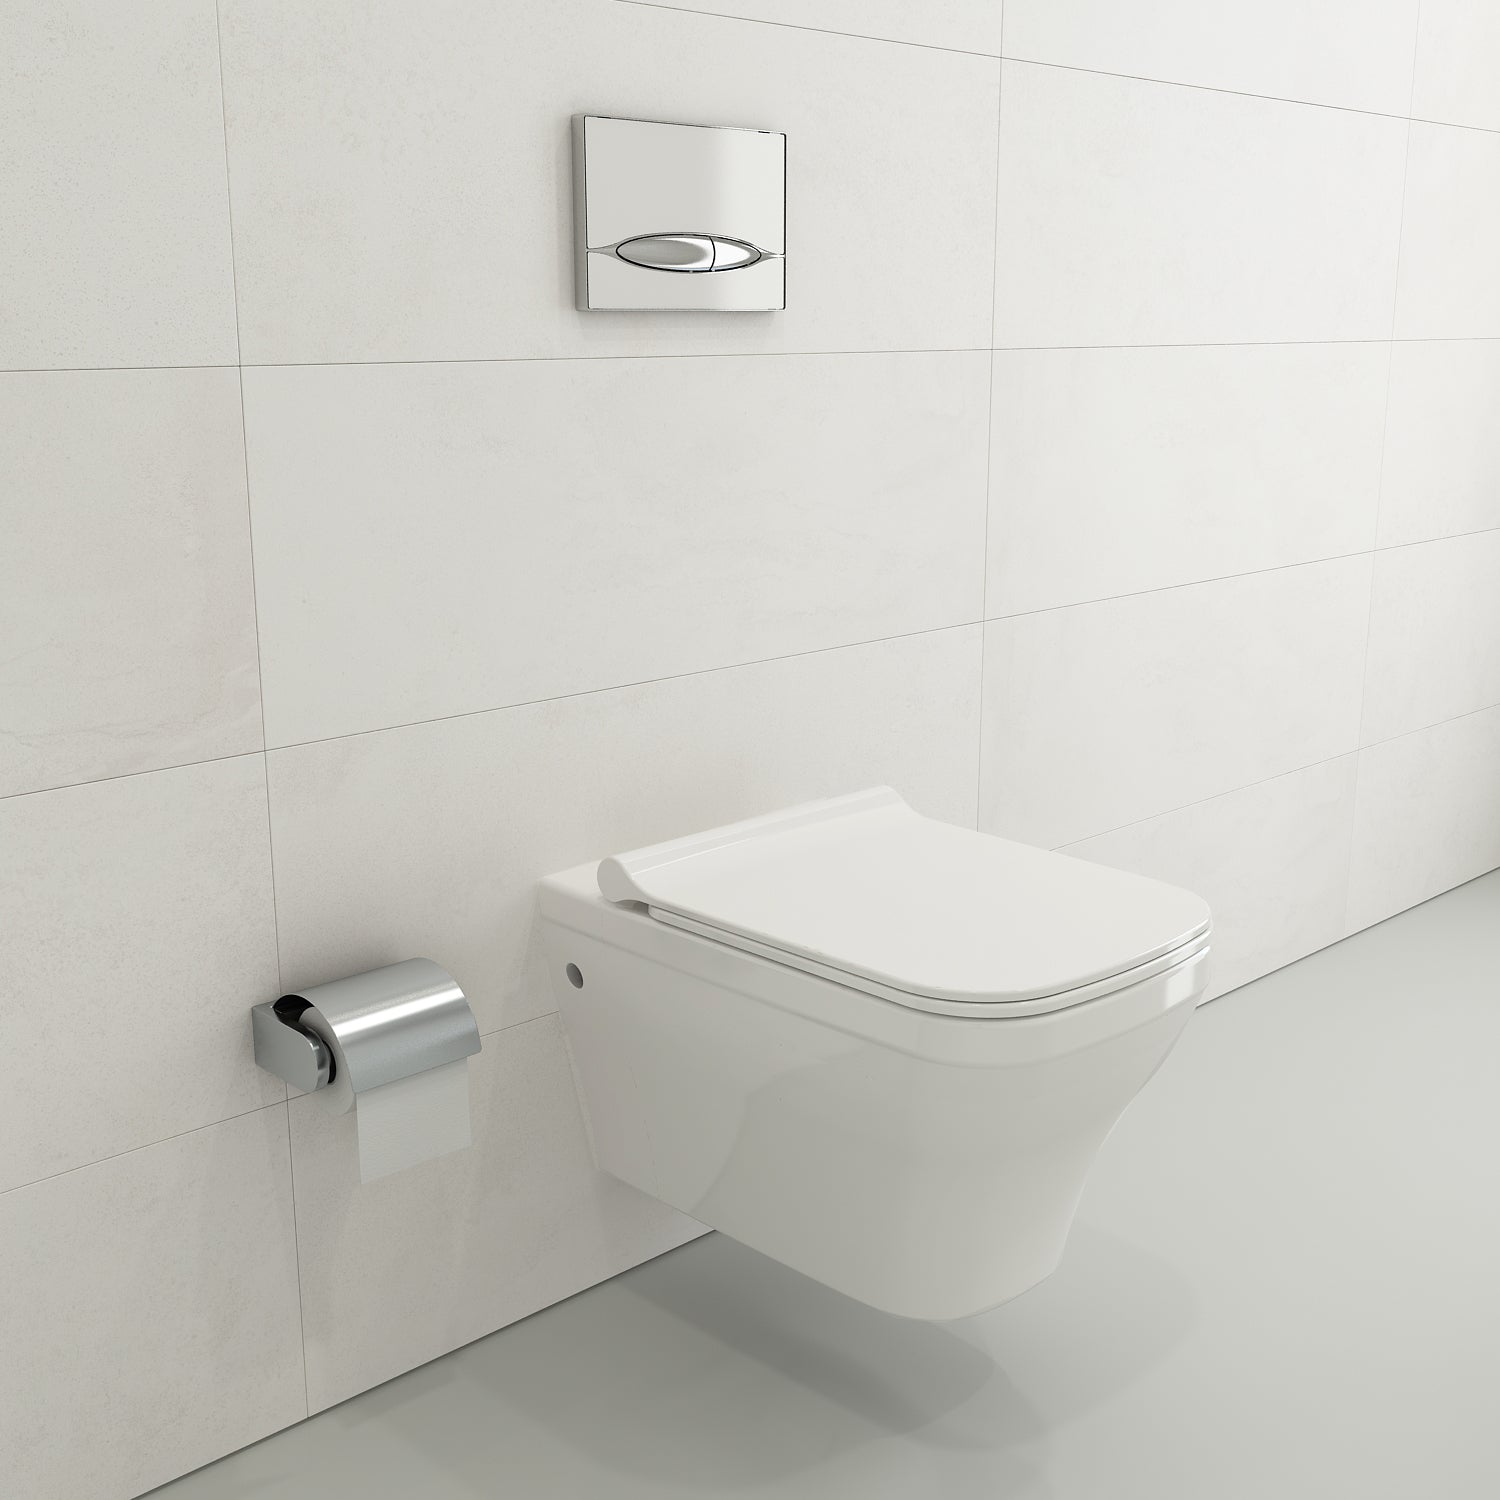 Firenze Soft-Close Toilet Seat in White | KitchBath